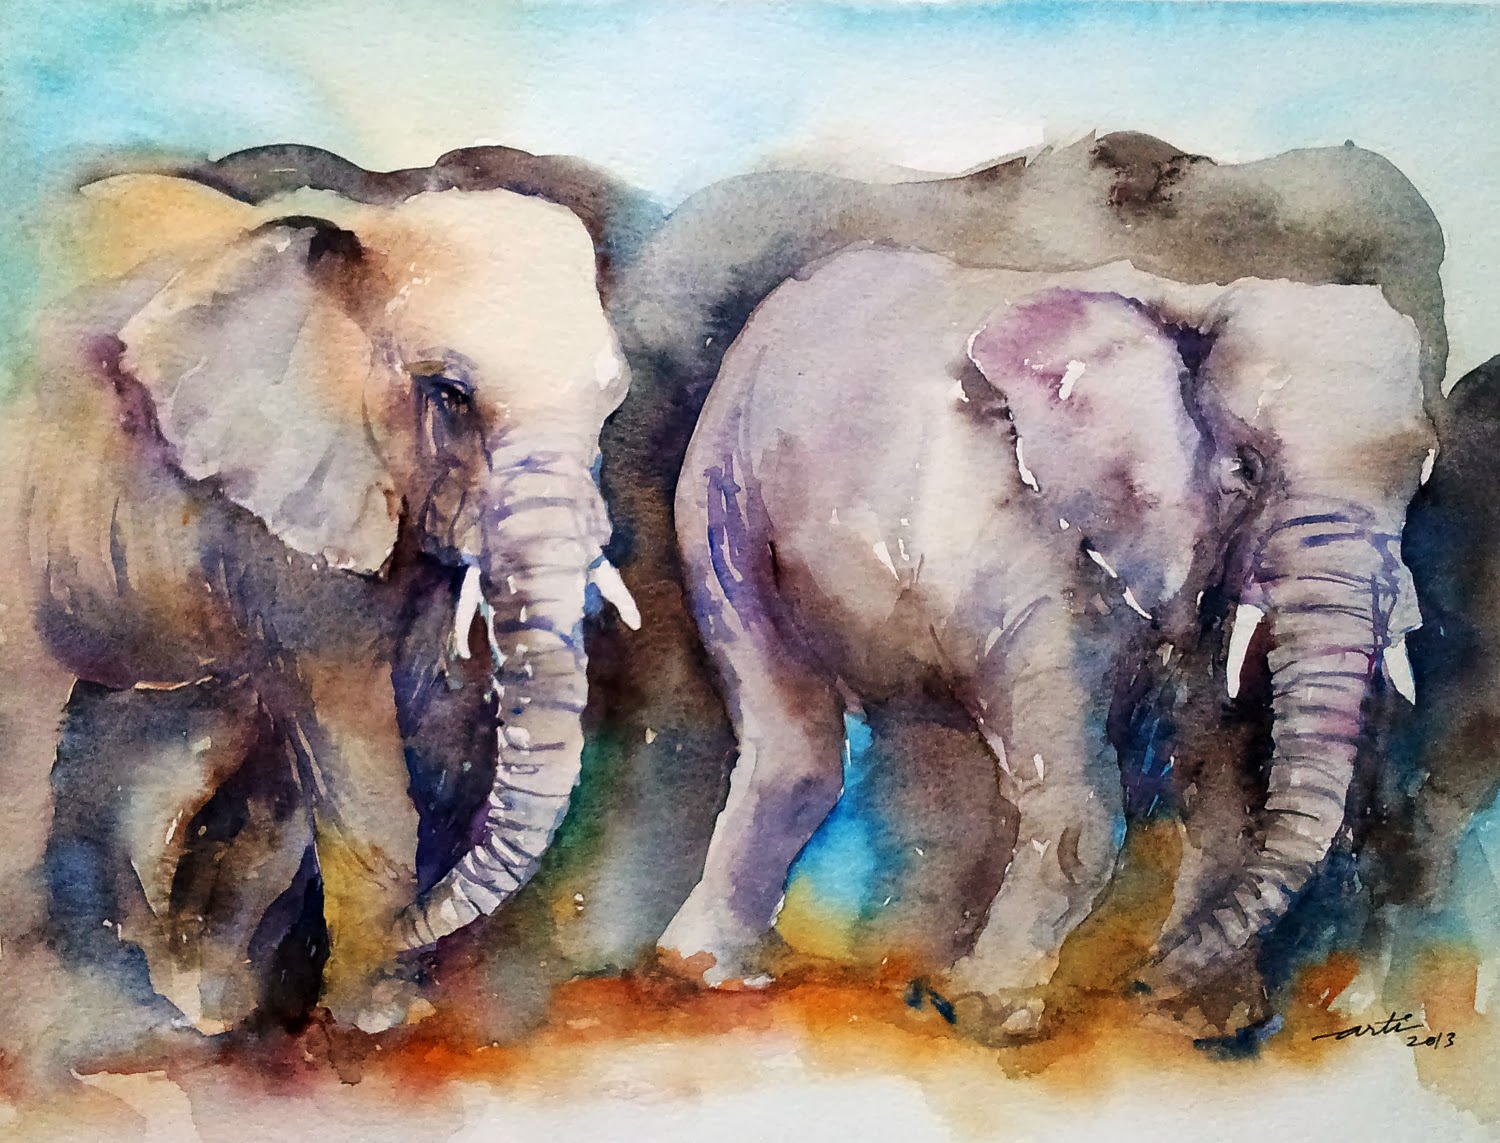 Arti's art -- Life as I see it: Elephant Paintings